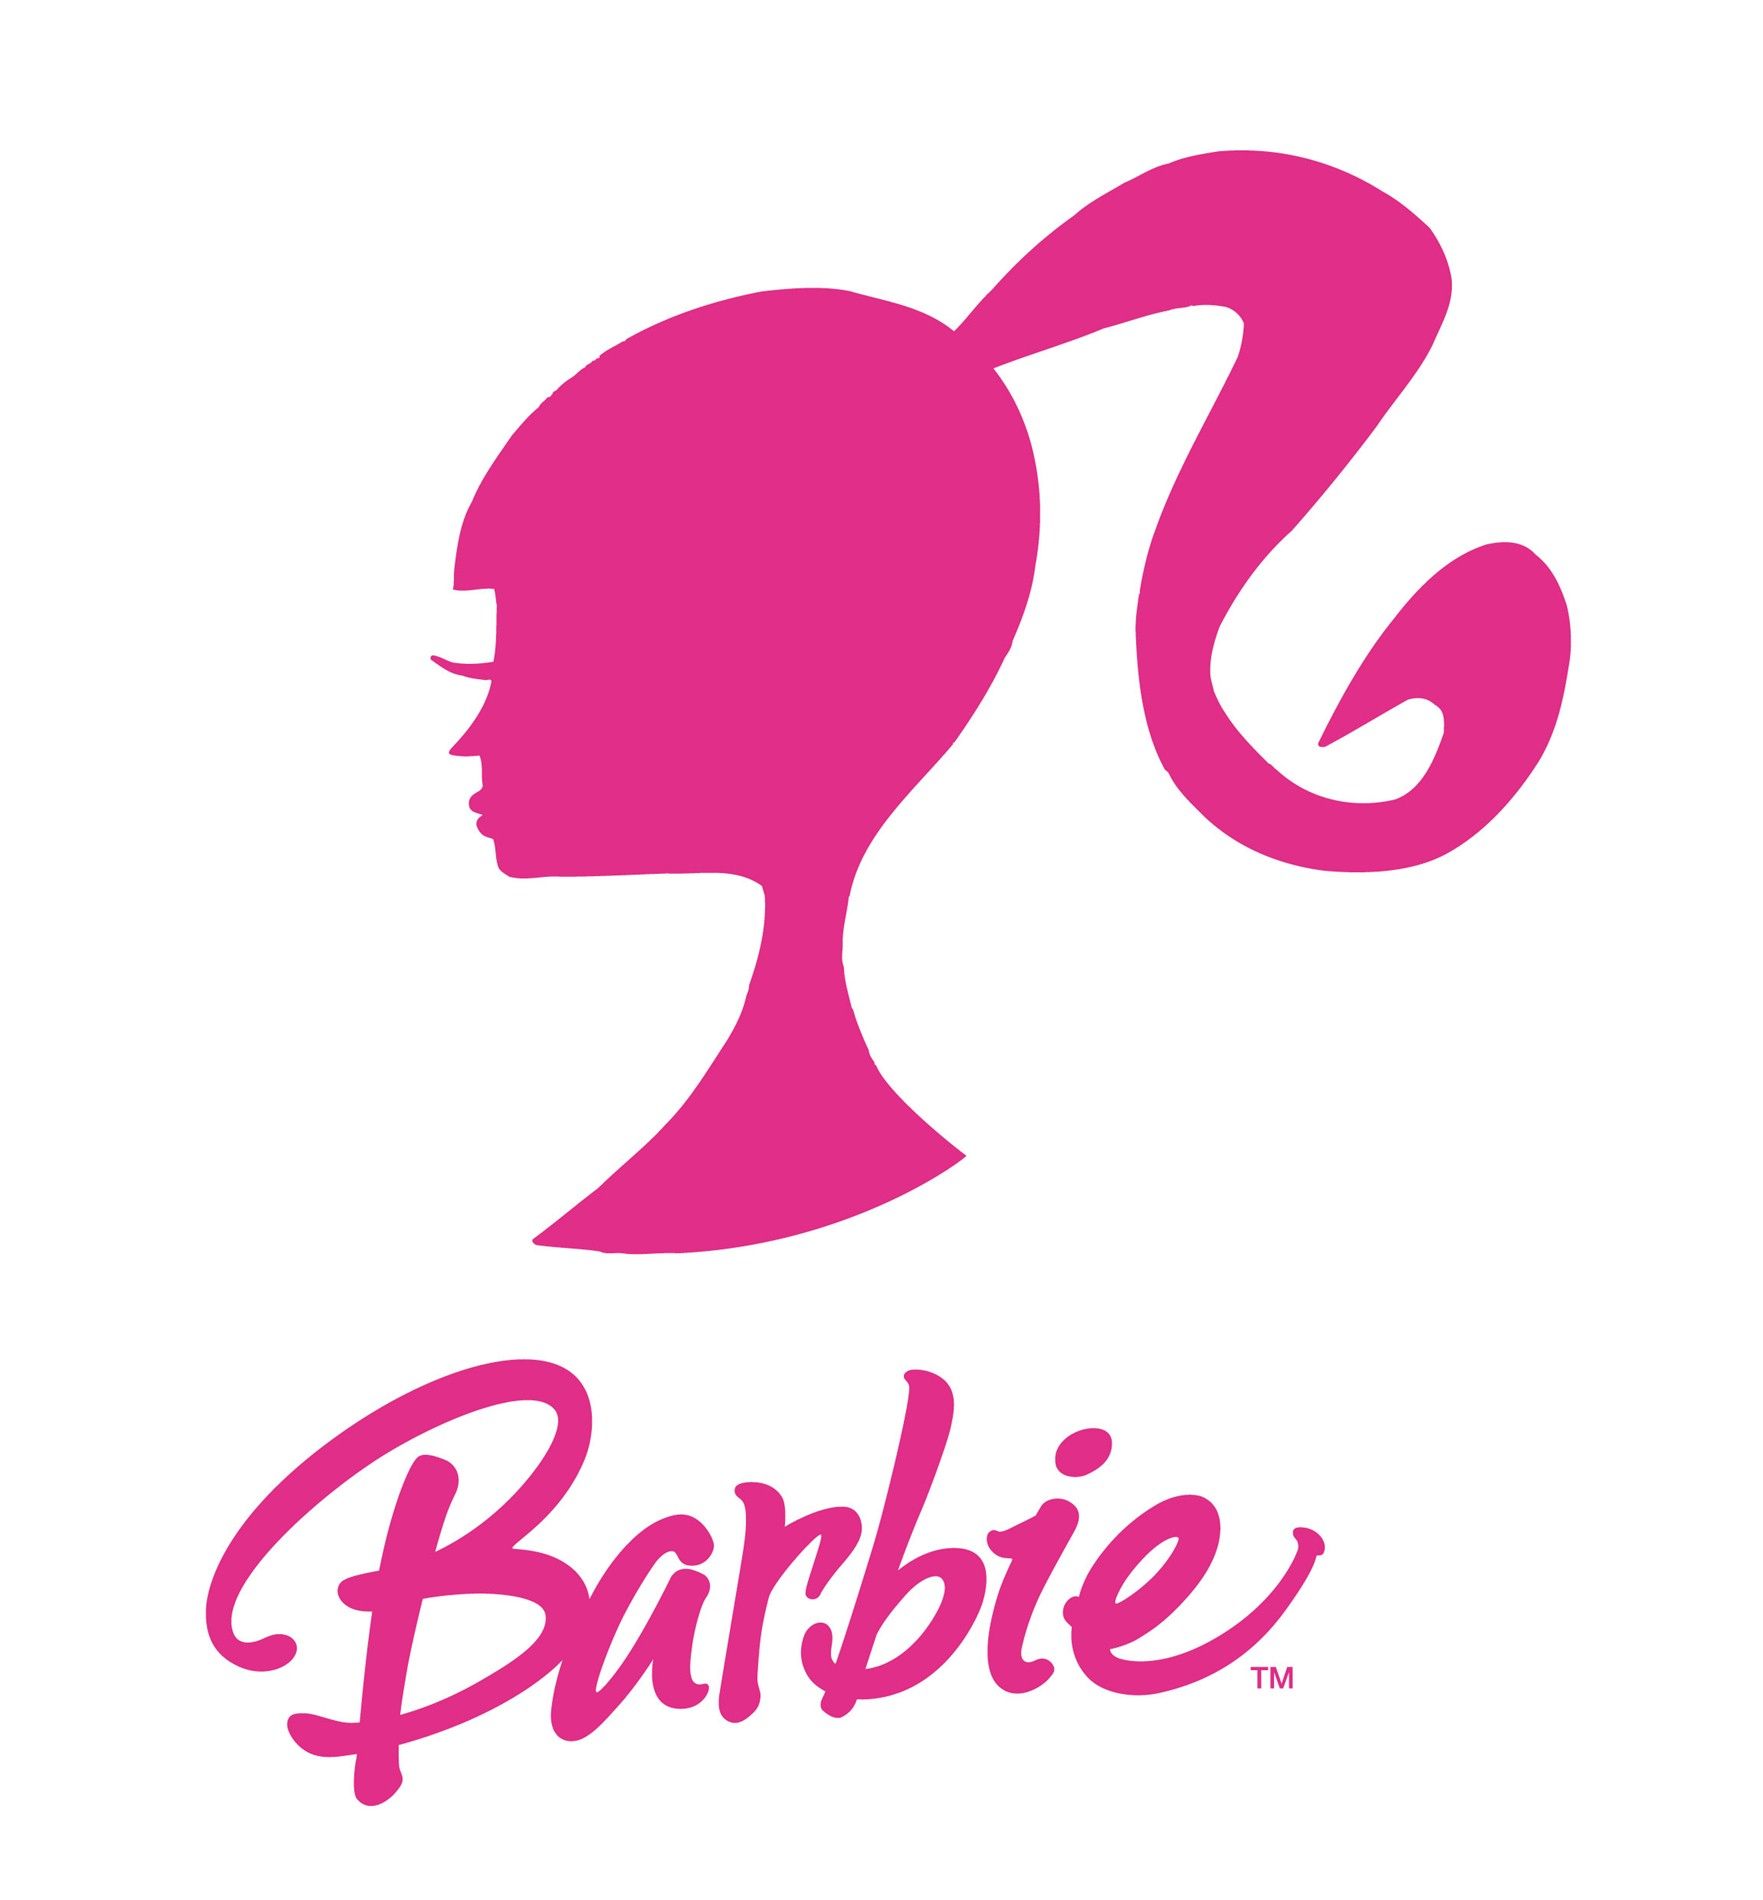 Barbie Logo PNG - 177023